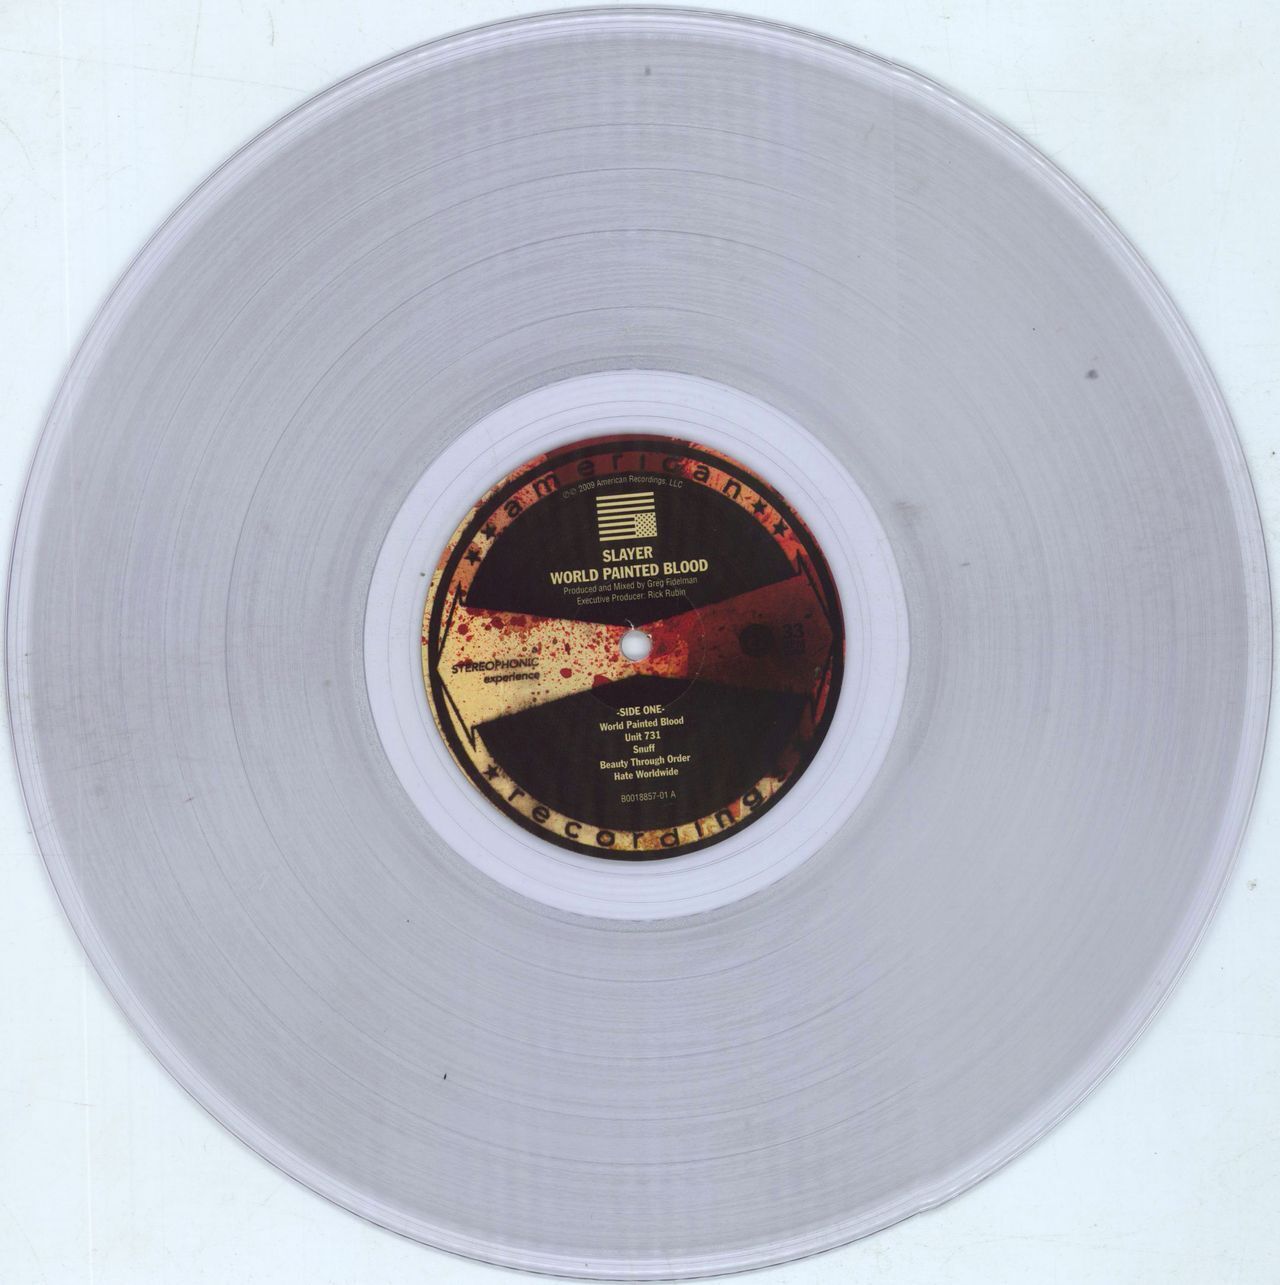 Slayer World Painted Blood - Clear Vinyl - Open Shrink US Vinyl LP